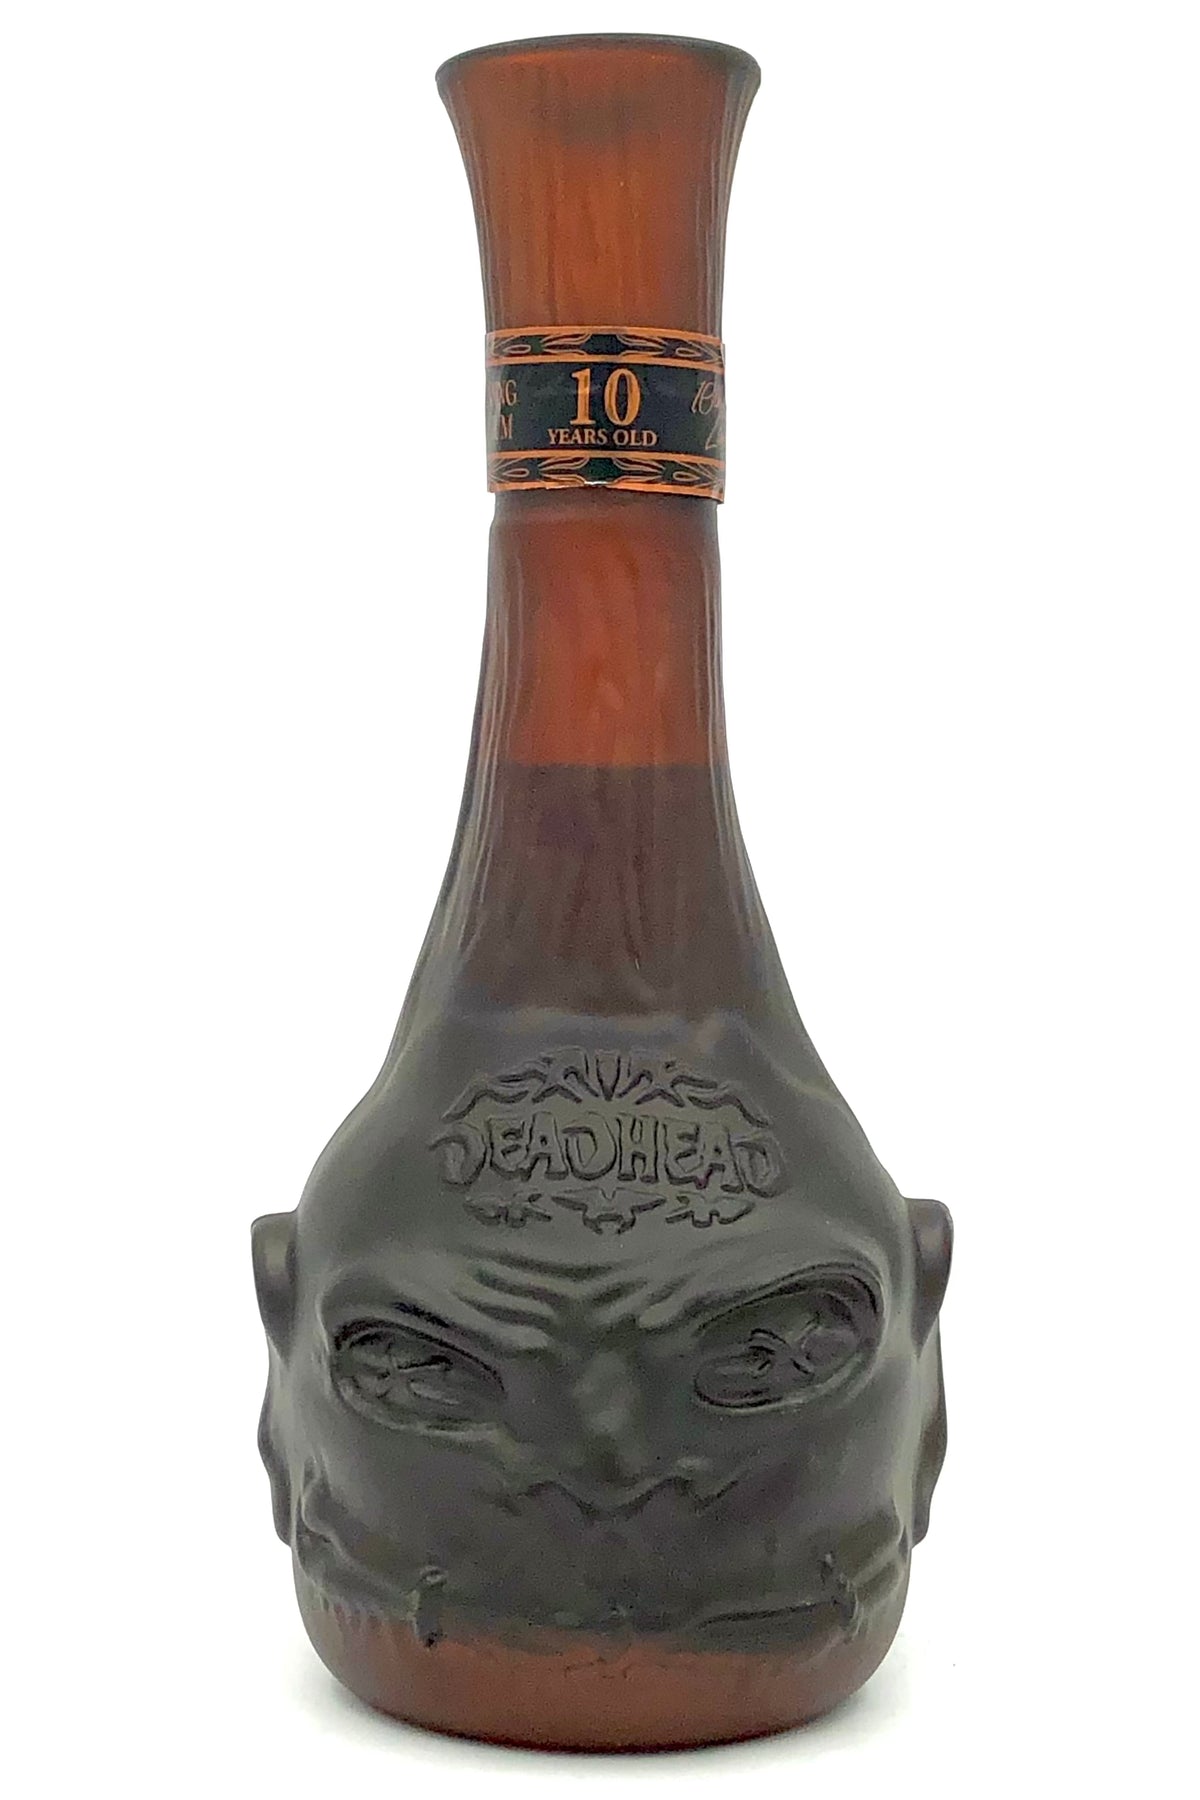 Deadhead 10 Year Old Rum Limited Edition Anniversary